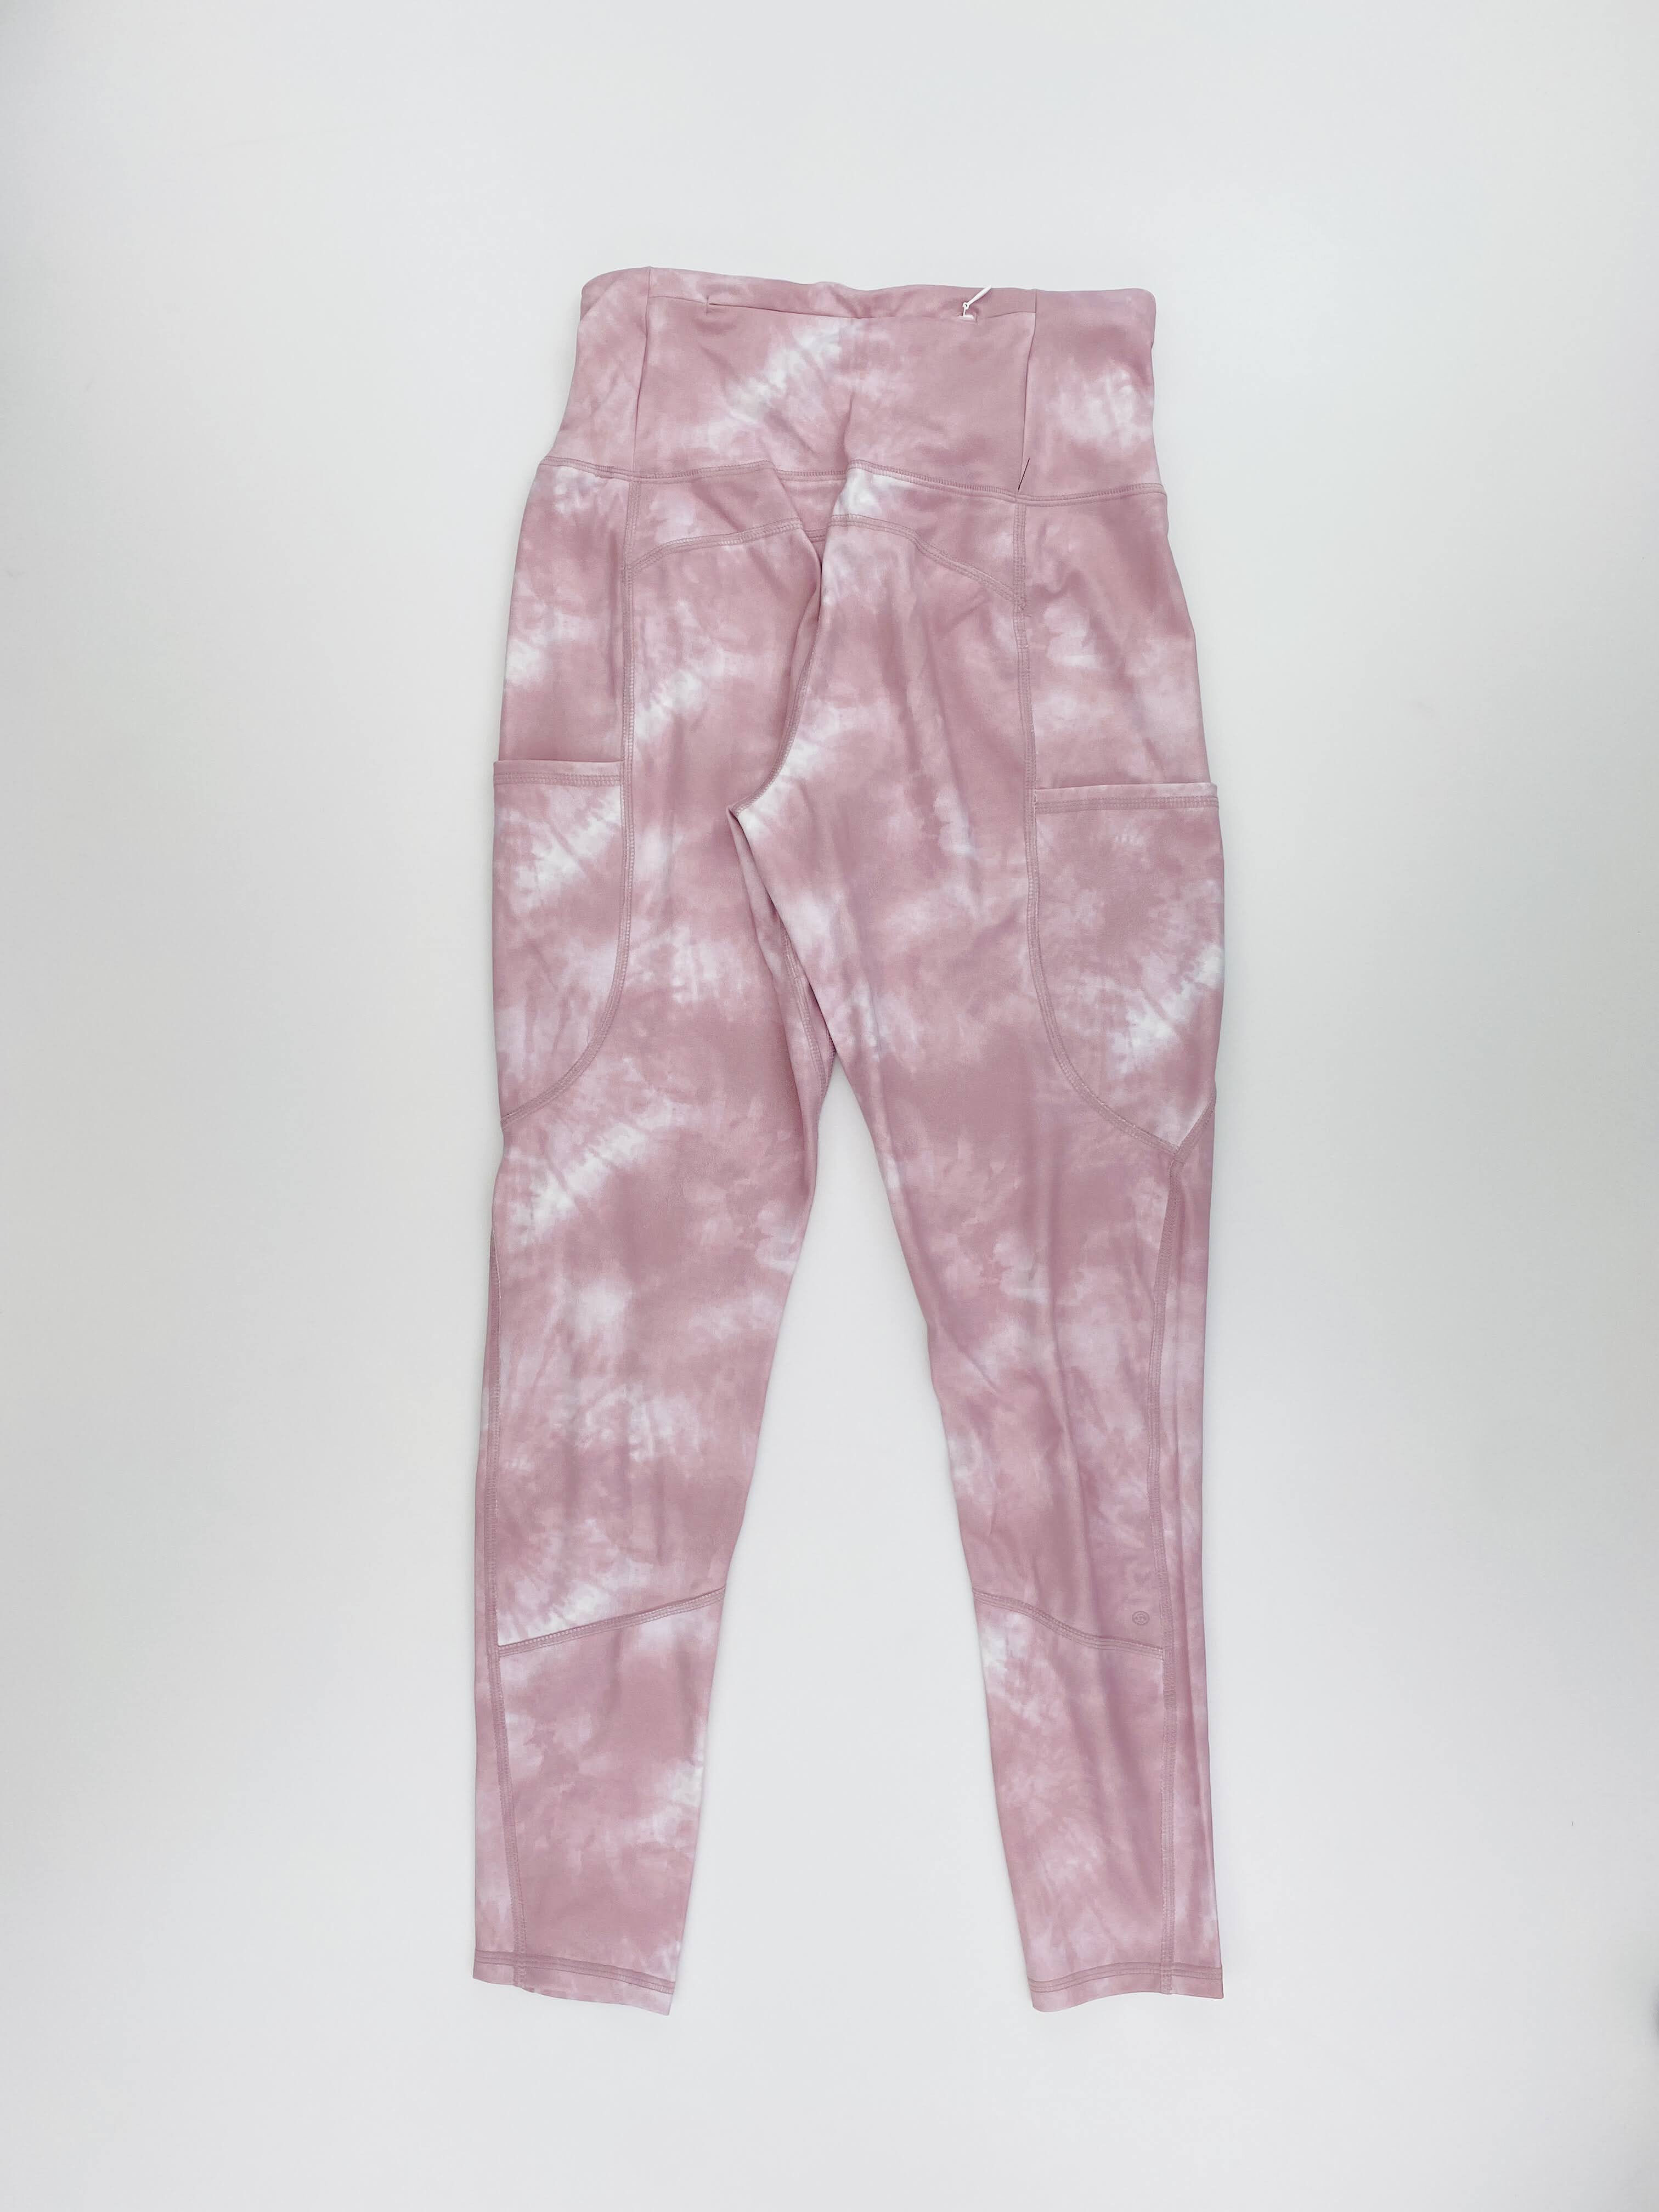 Wrangler Compression Legging - Second Hand Walking trousers - Women's - Pink - S | Hardloop